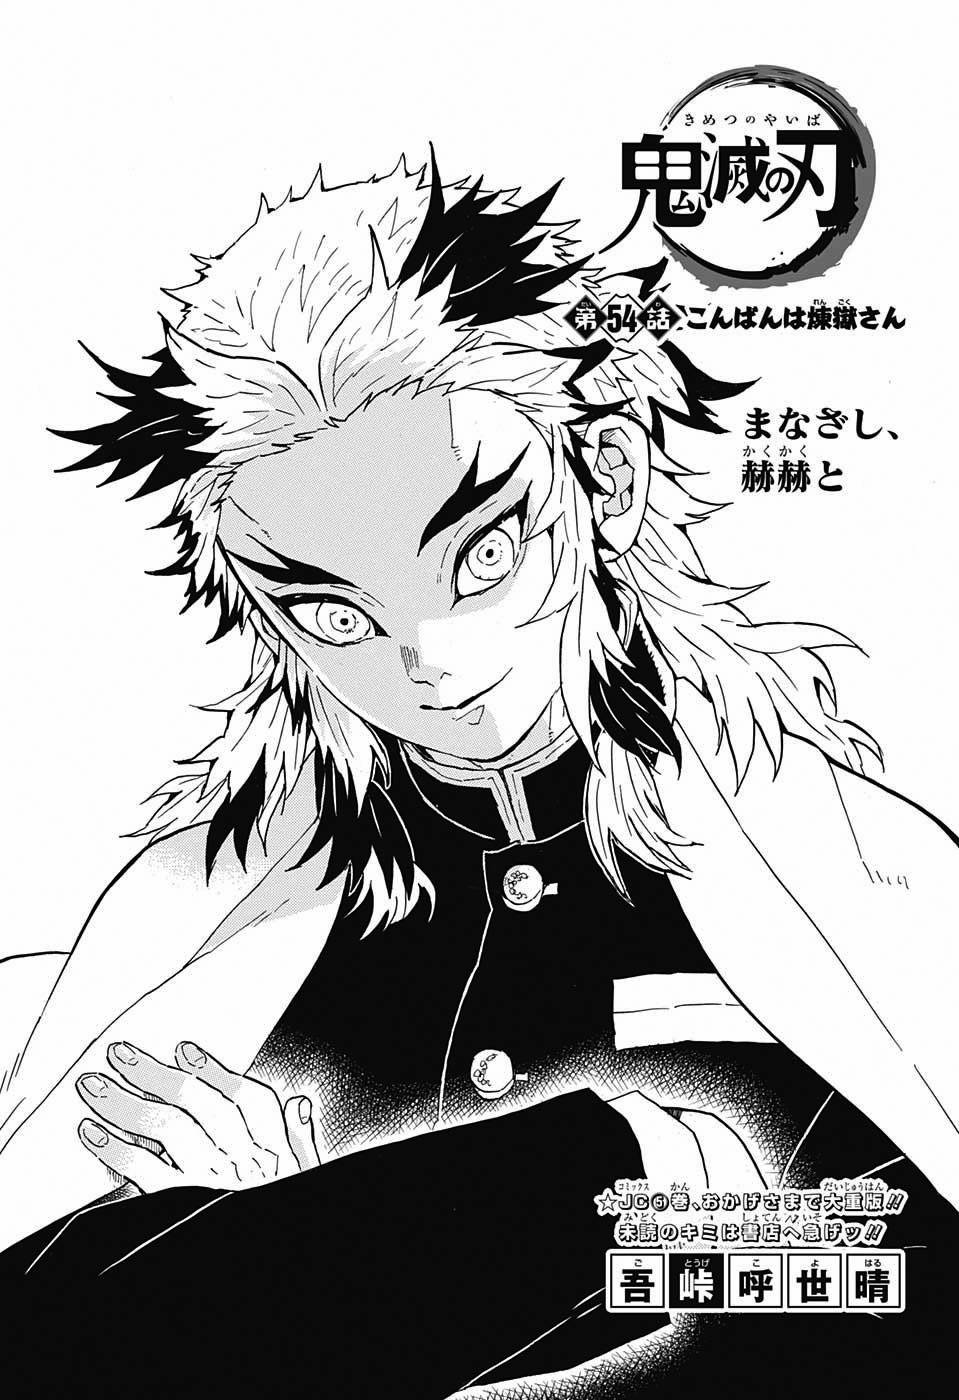 Rengoku Manga Cover In Black And White Wallpaper